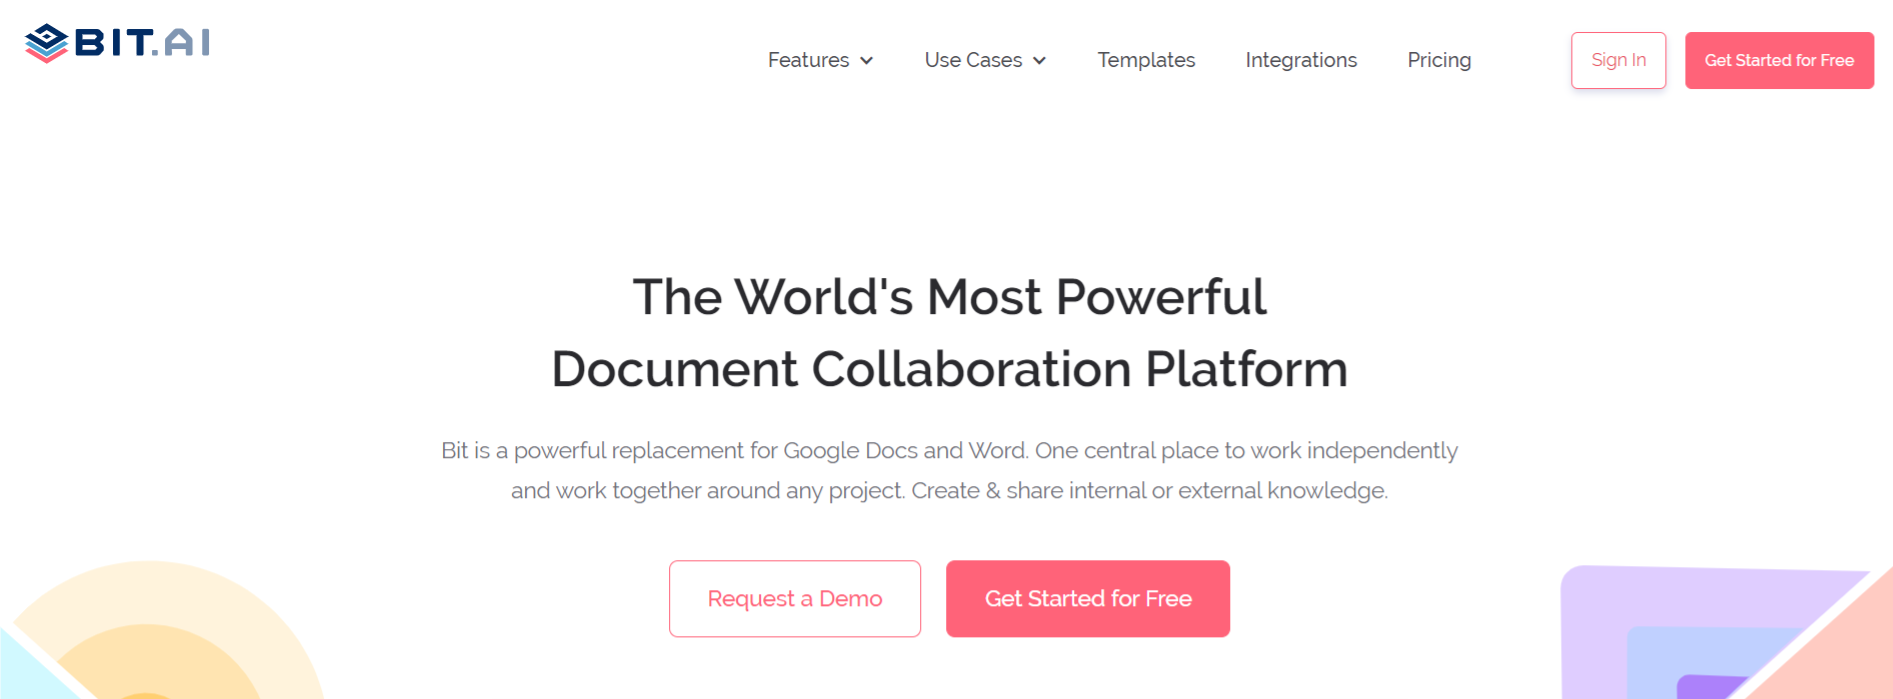 Bit.ai: Document Collaboration Tool